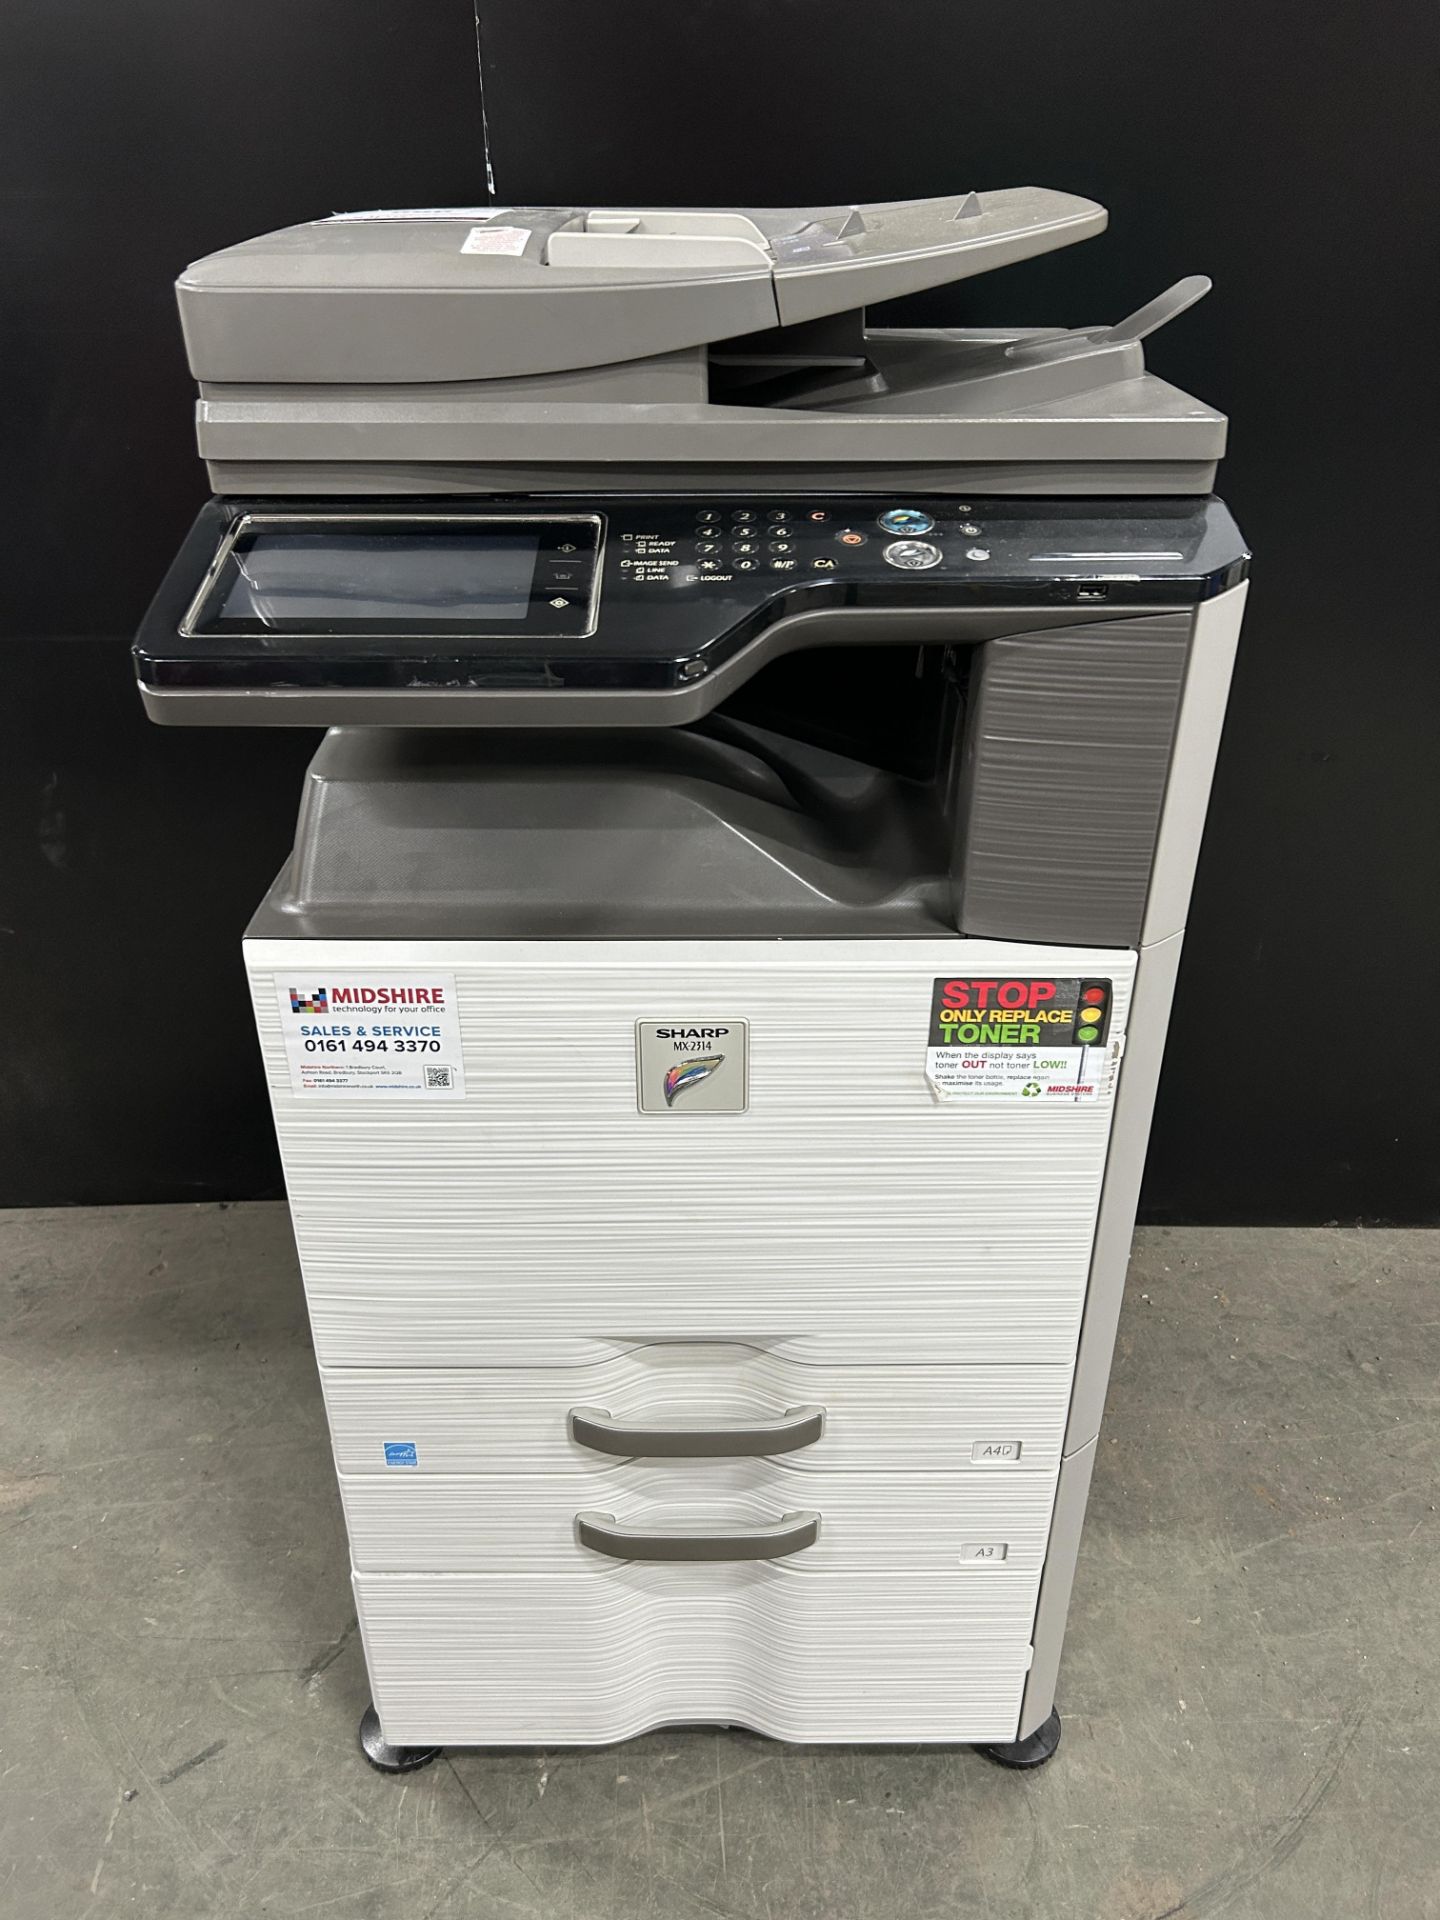 Sharp MX-2314 copier